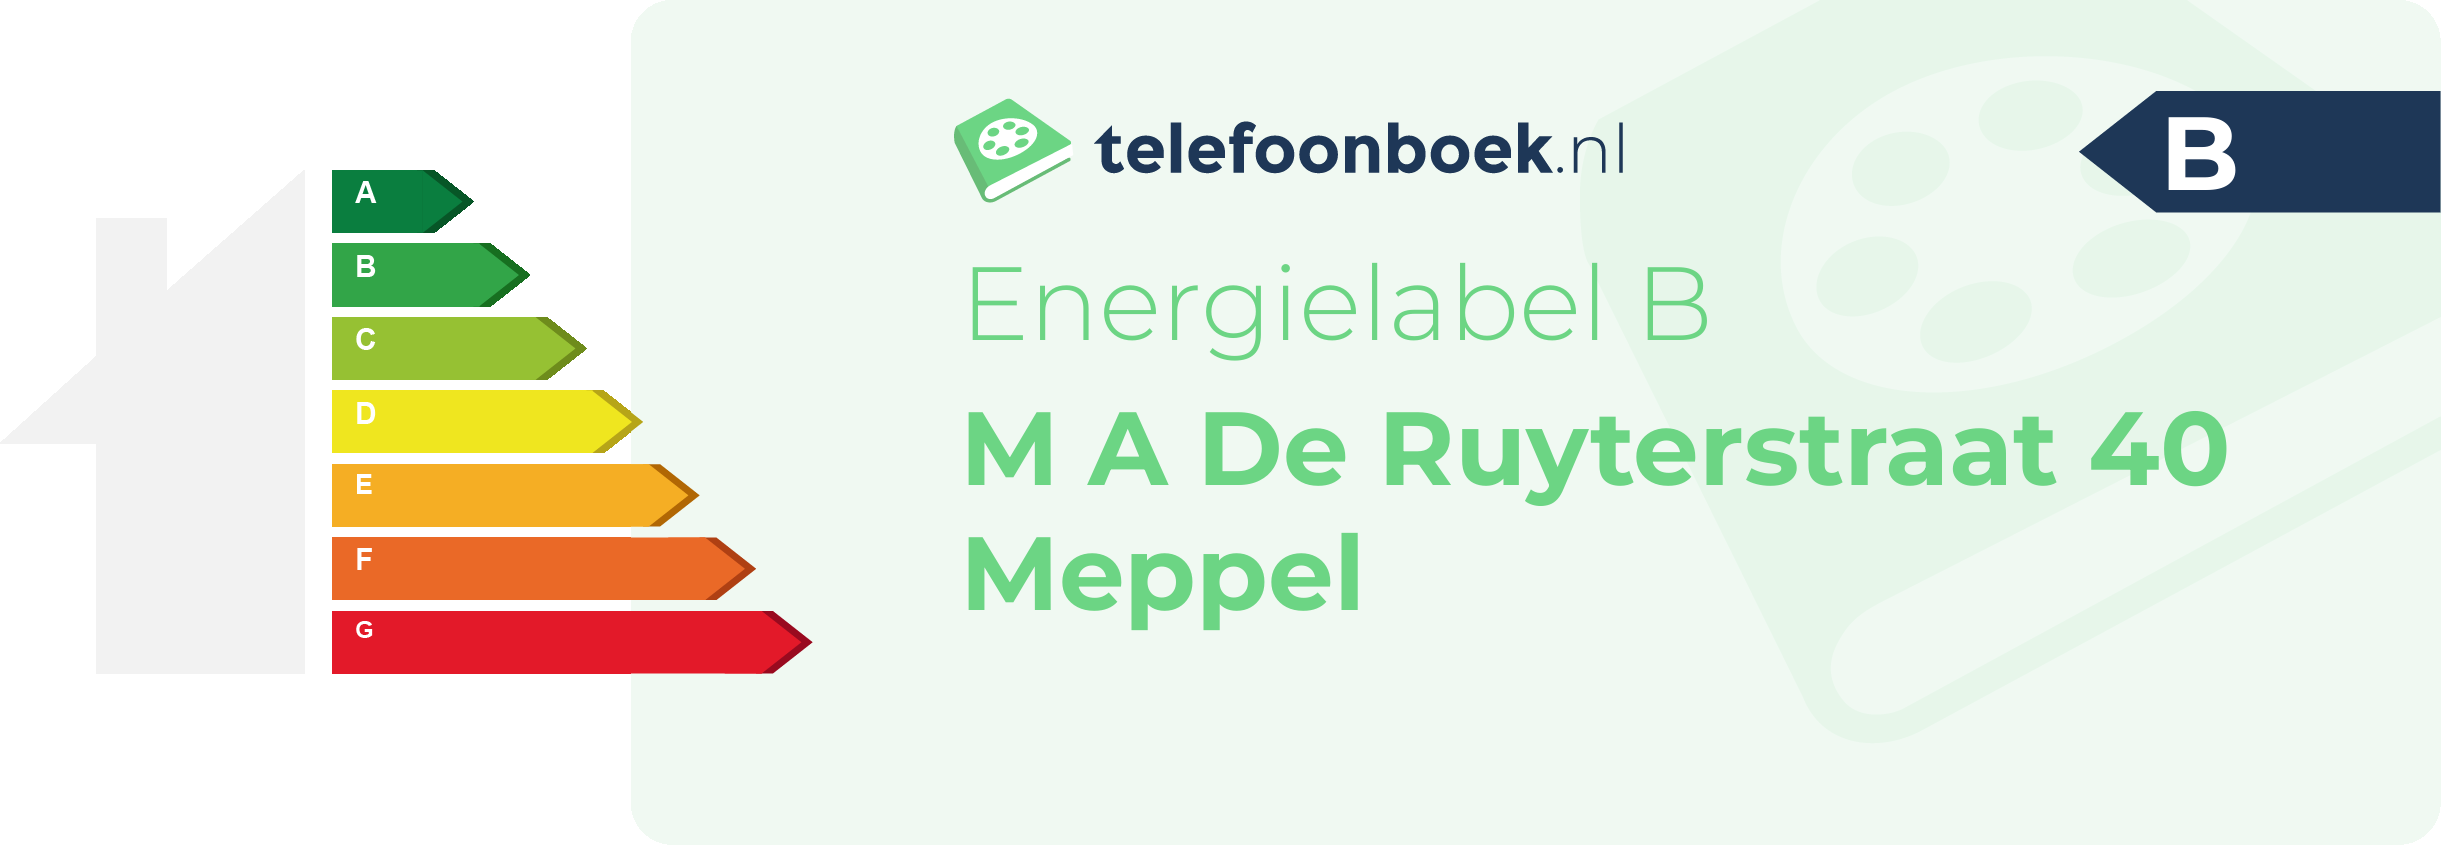 Energielabel M A De Ruyterstraat 40 Meppel